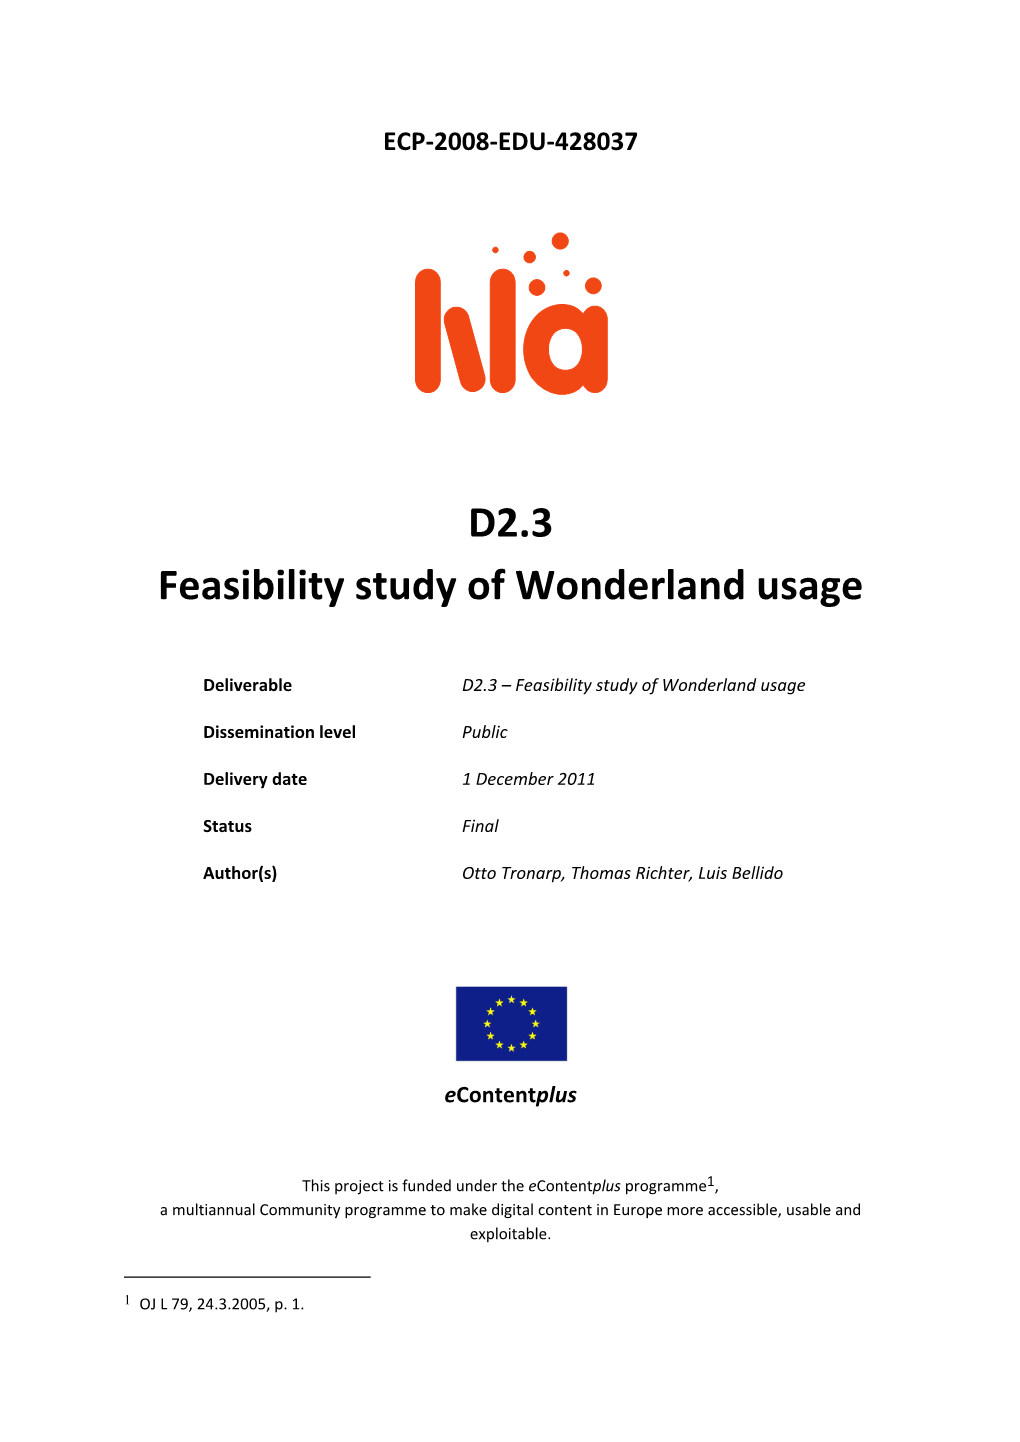 D2.3 Feasibility Study of Wonderland Usage